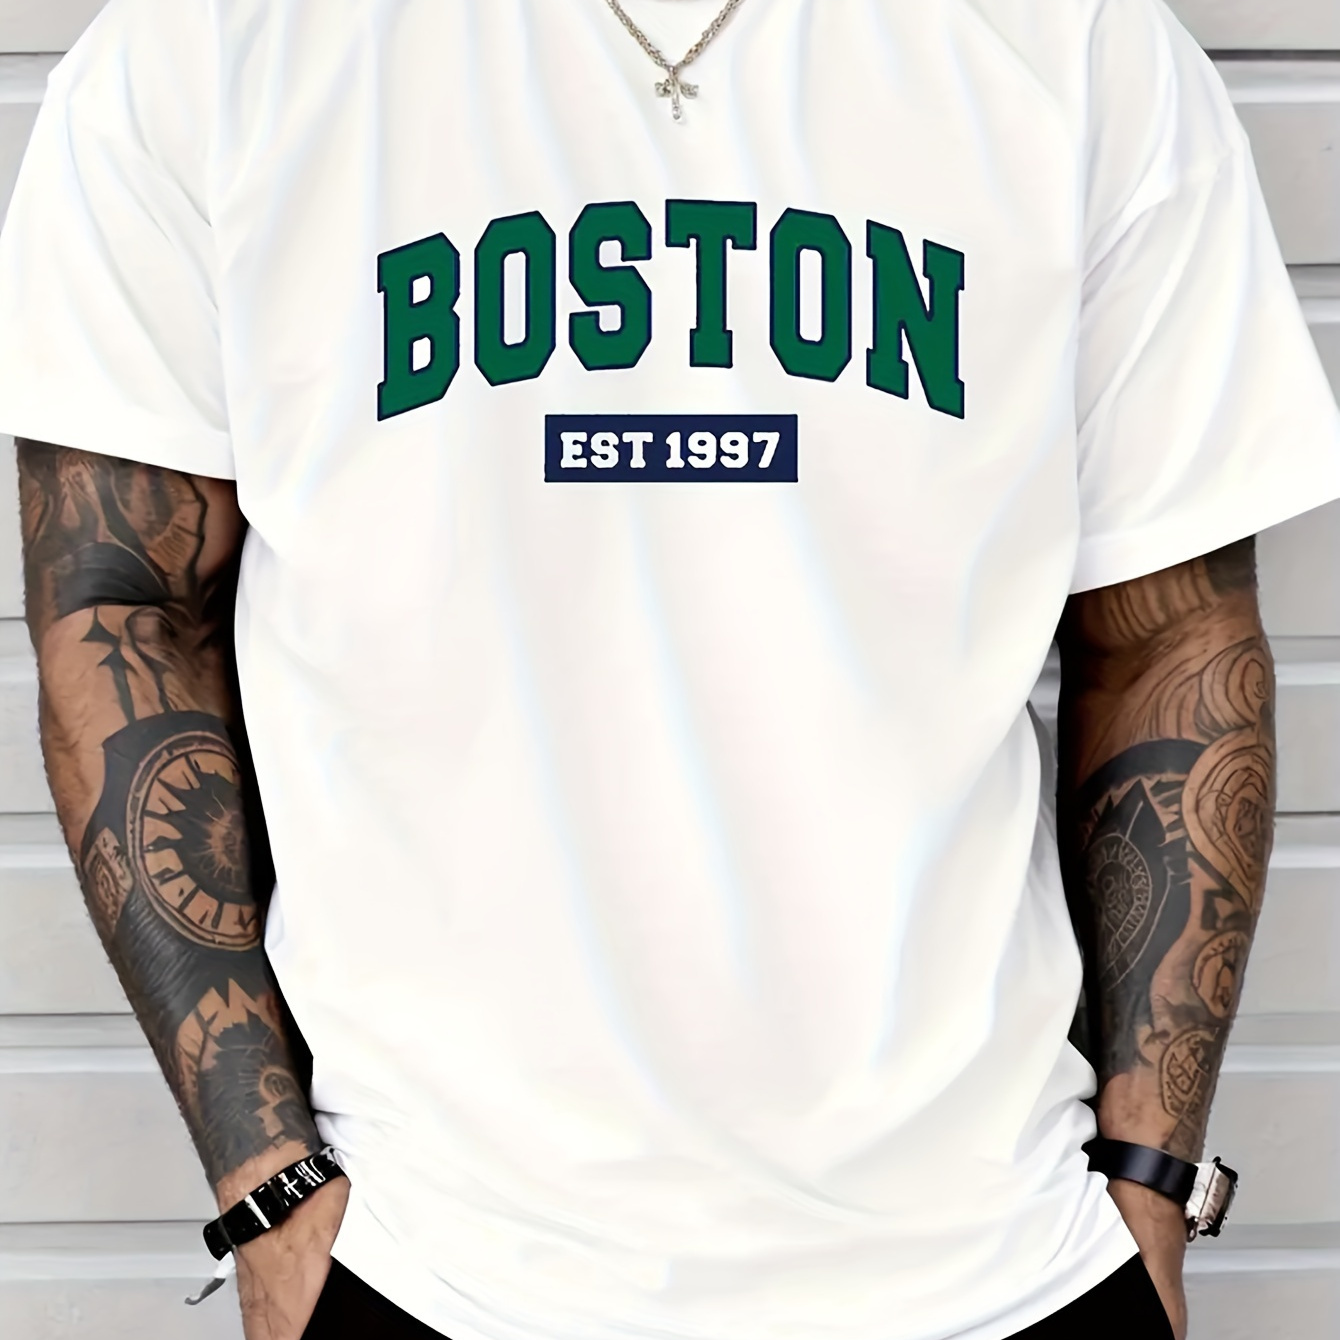 

Boston 1997 Print Tee Shirt, Tees For Men, Casual Short Sleeve T-shirt For Summer